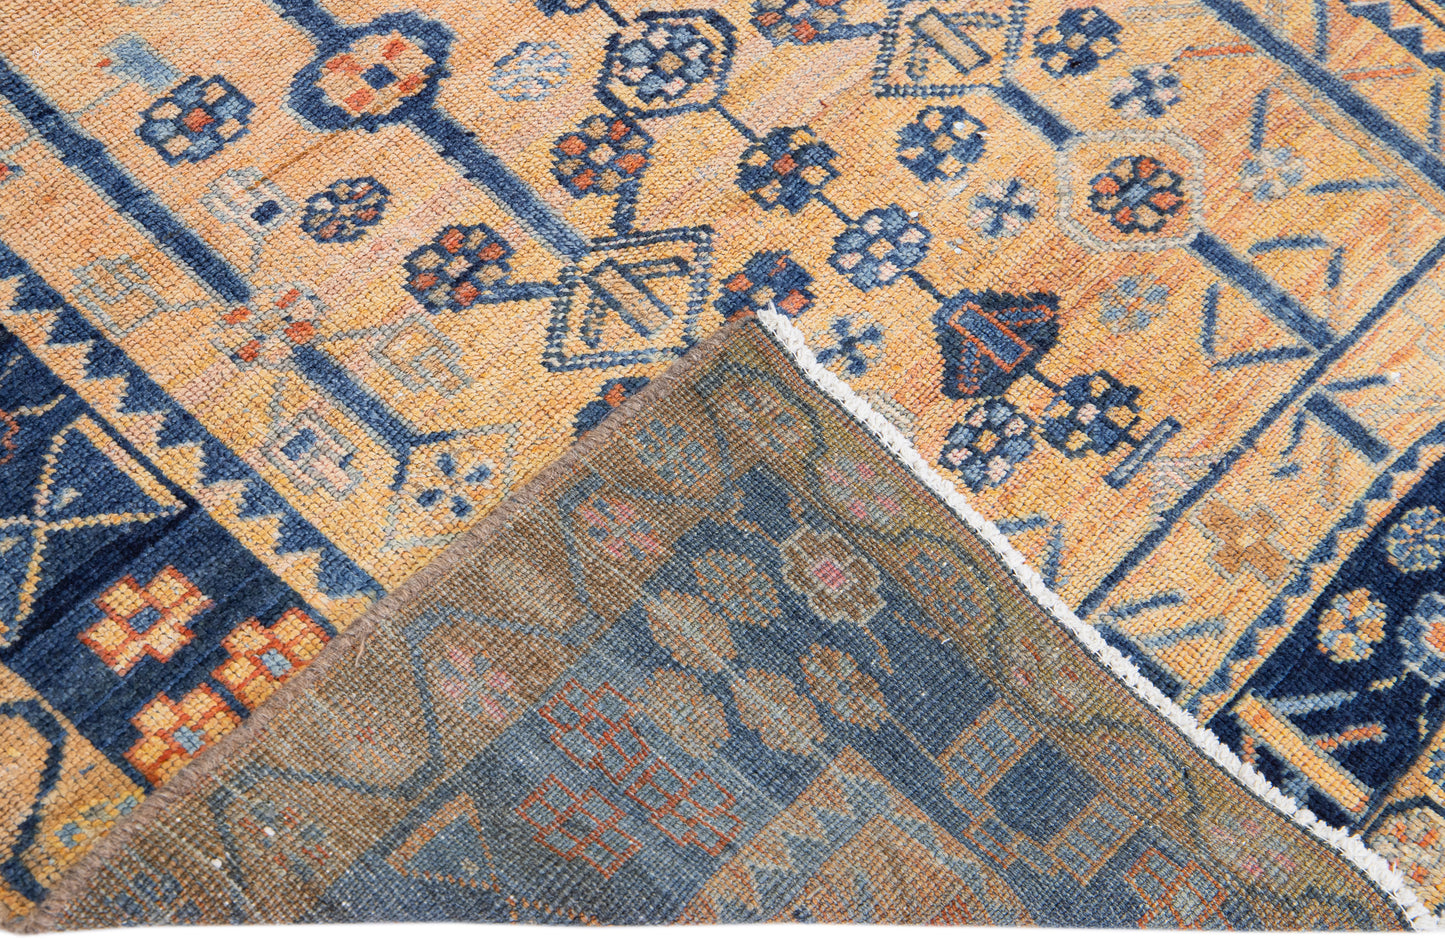 Backside of handmade blue and beige wool rug